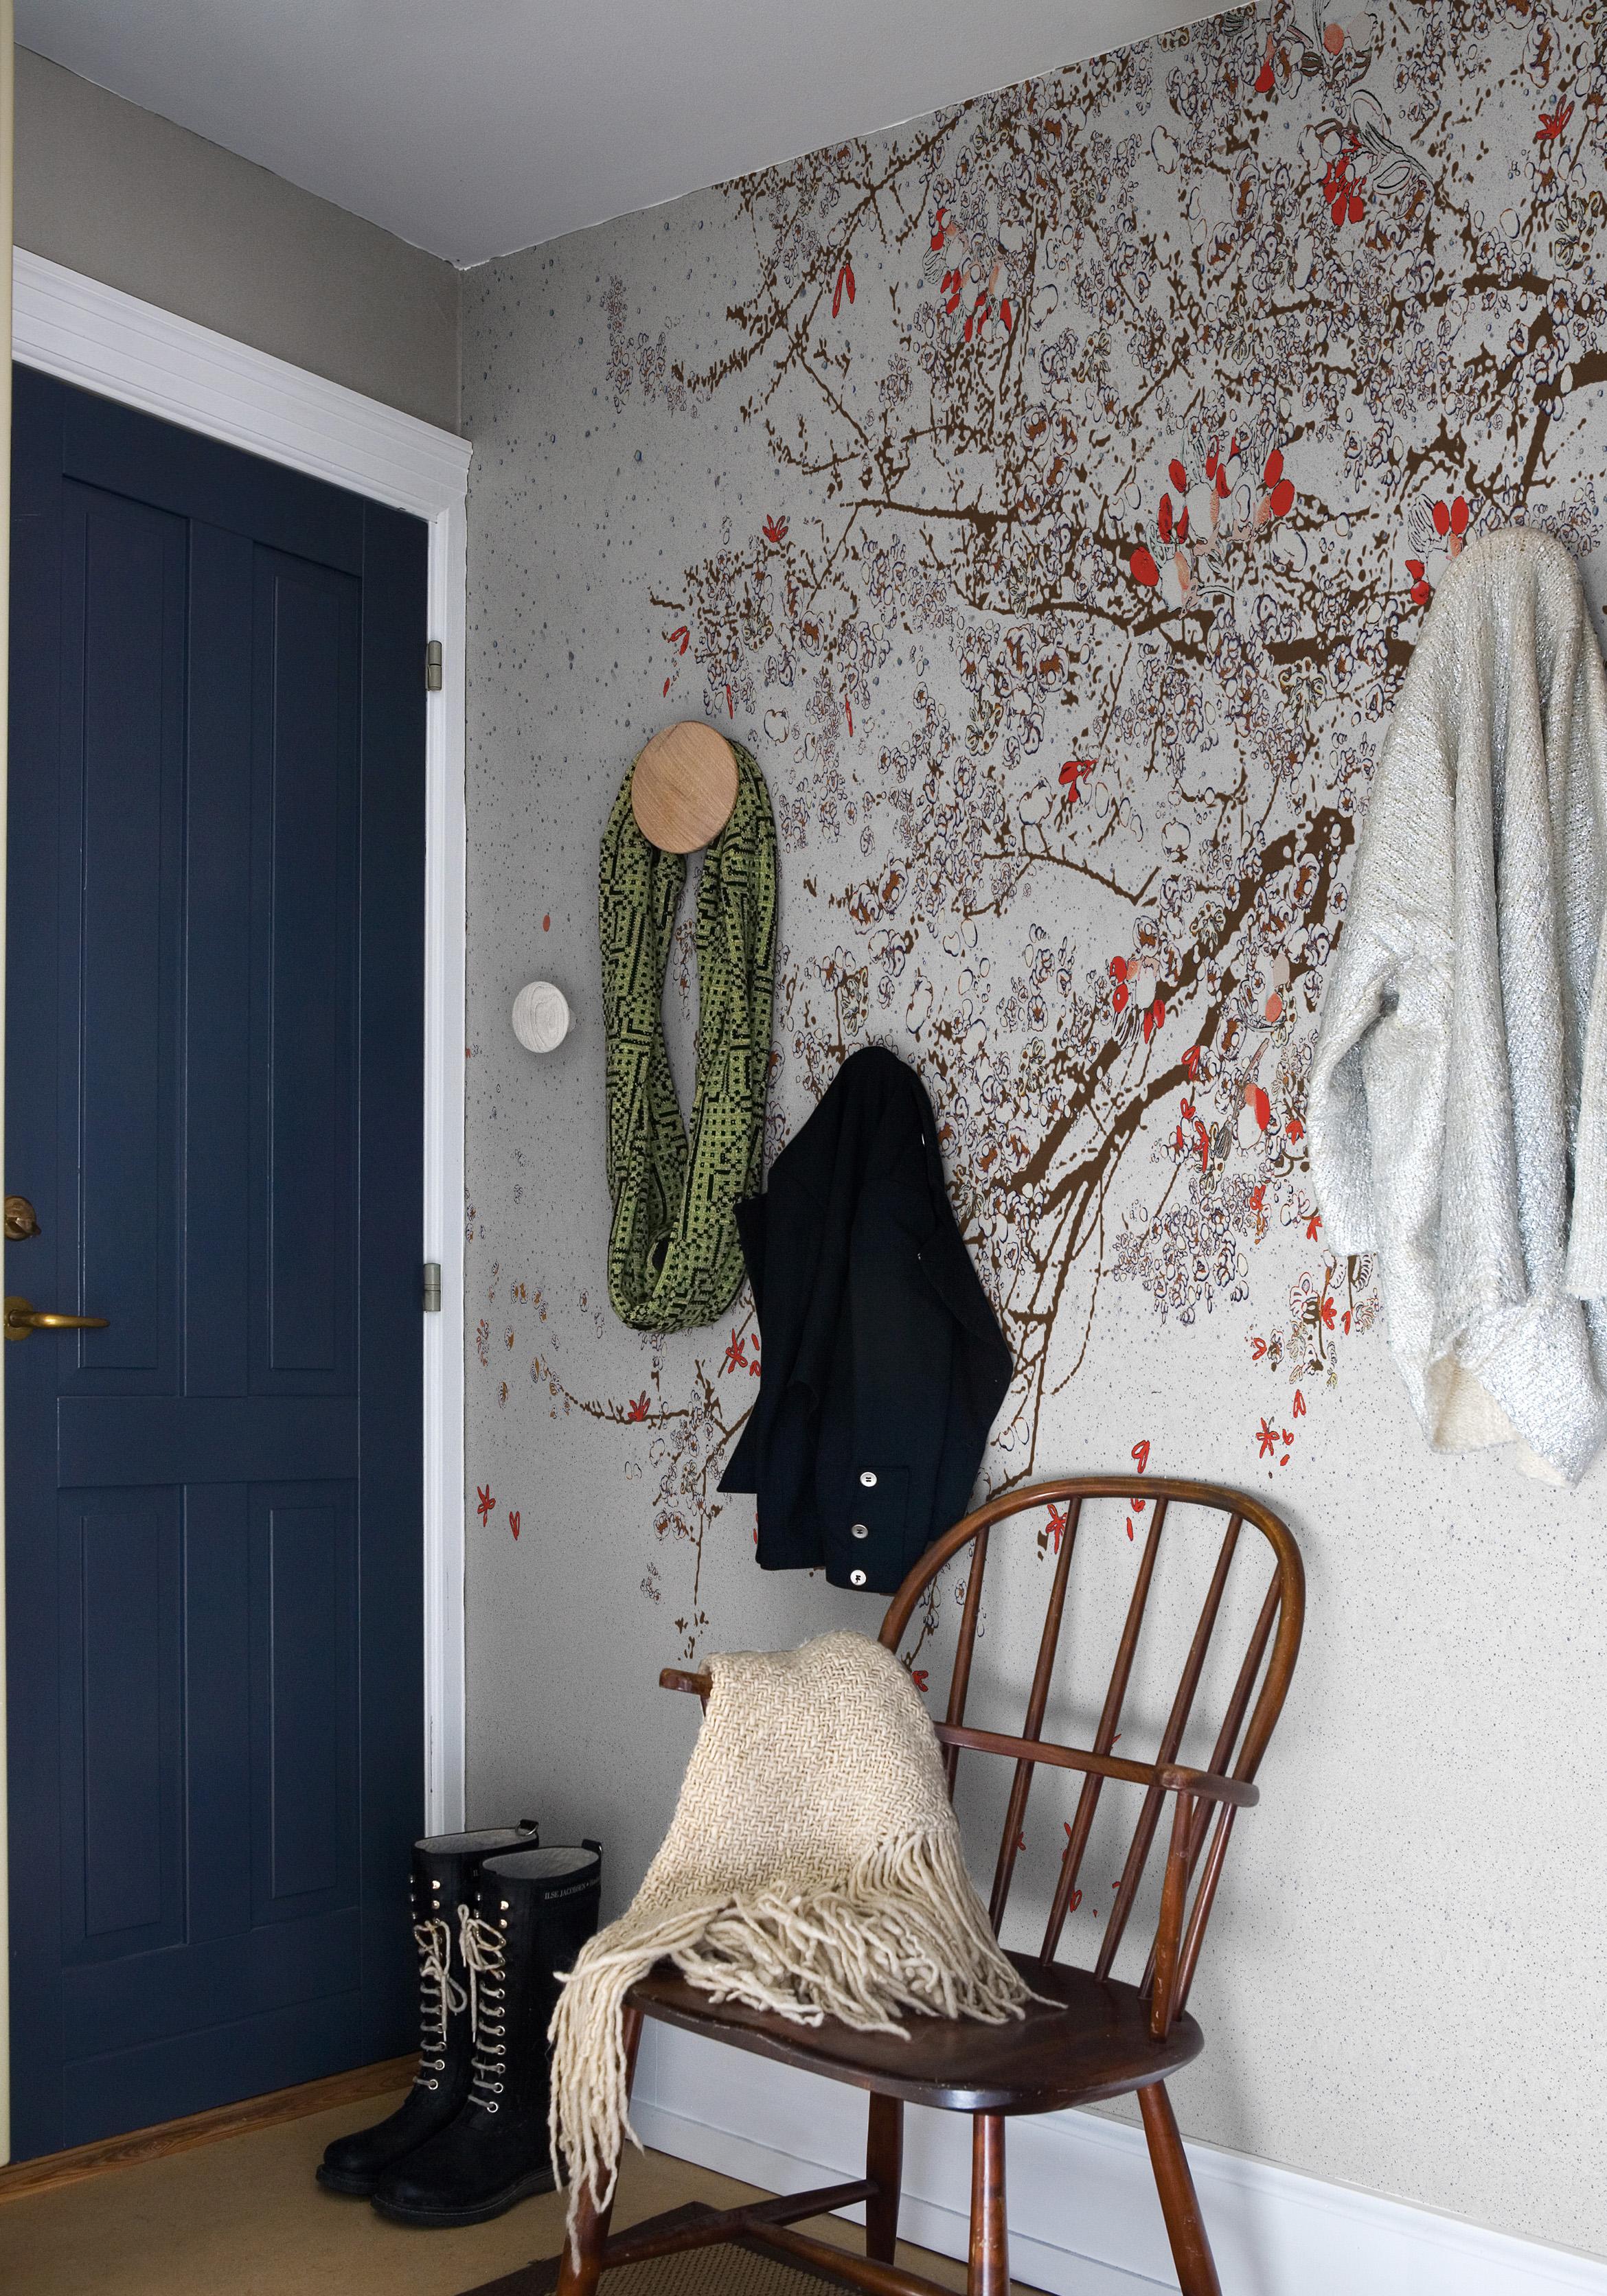 Tapete mit Blütenmotiv #stuhl #motivtapete #garderobenhaken #wall&deco #designwand #wandgestaltungflur ©Wall&Deco